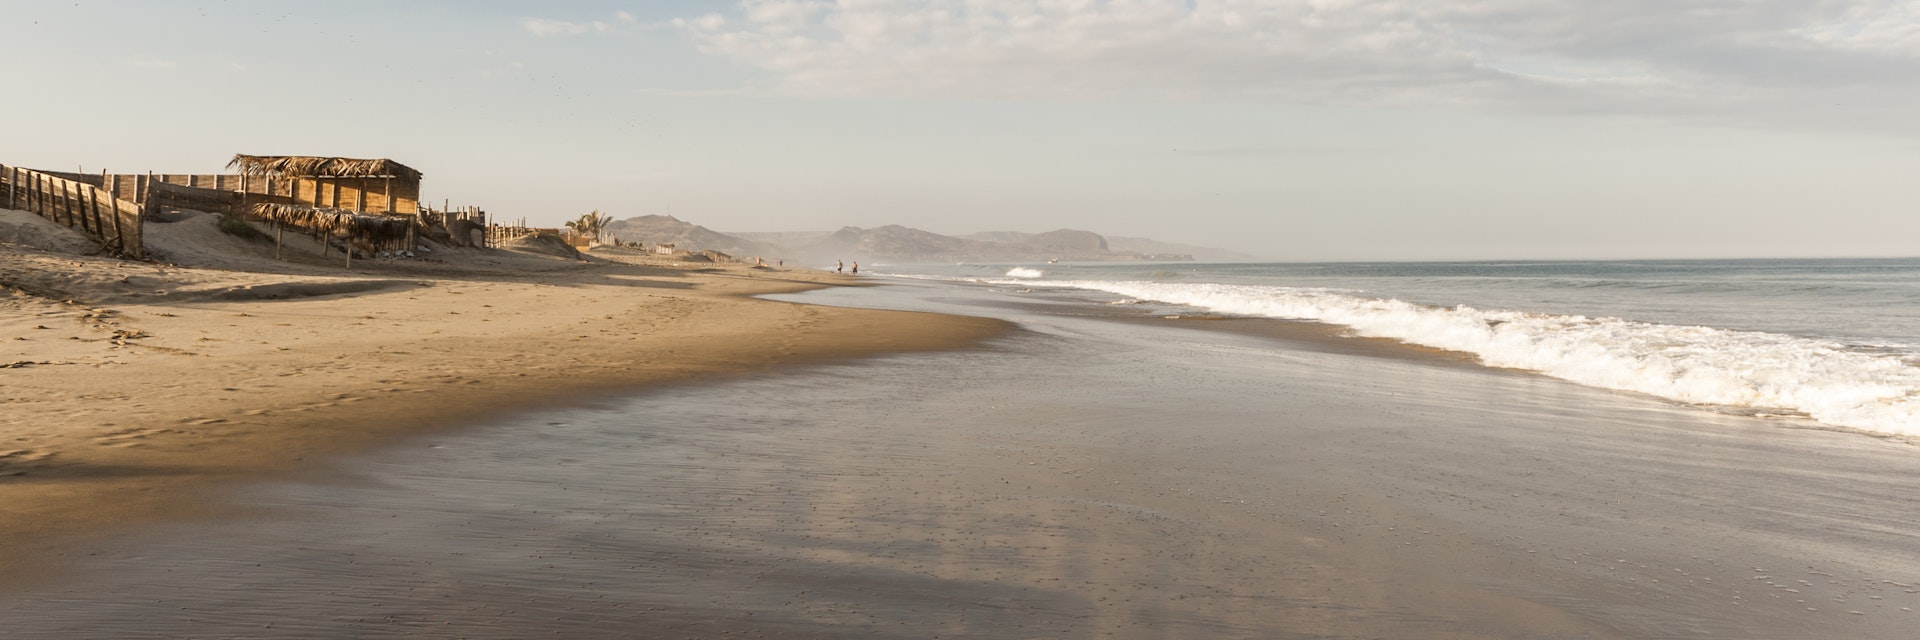 Mancora, beach and surf town in Peru